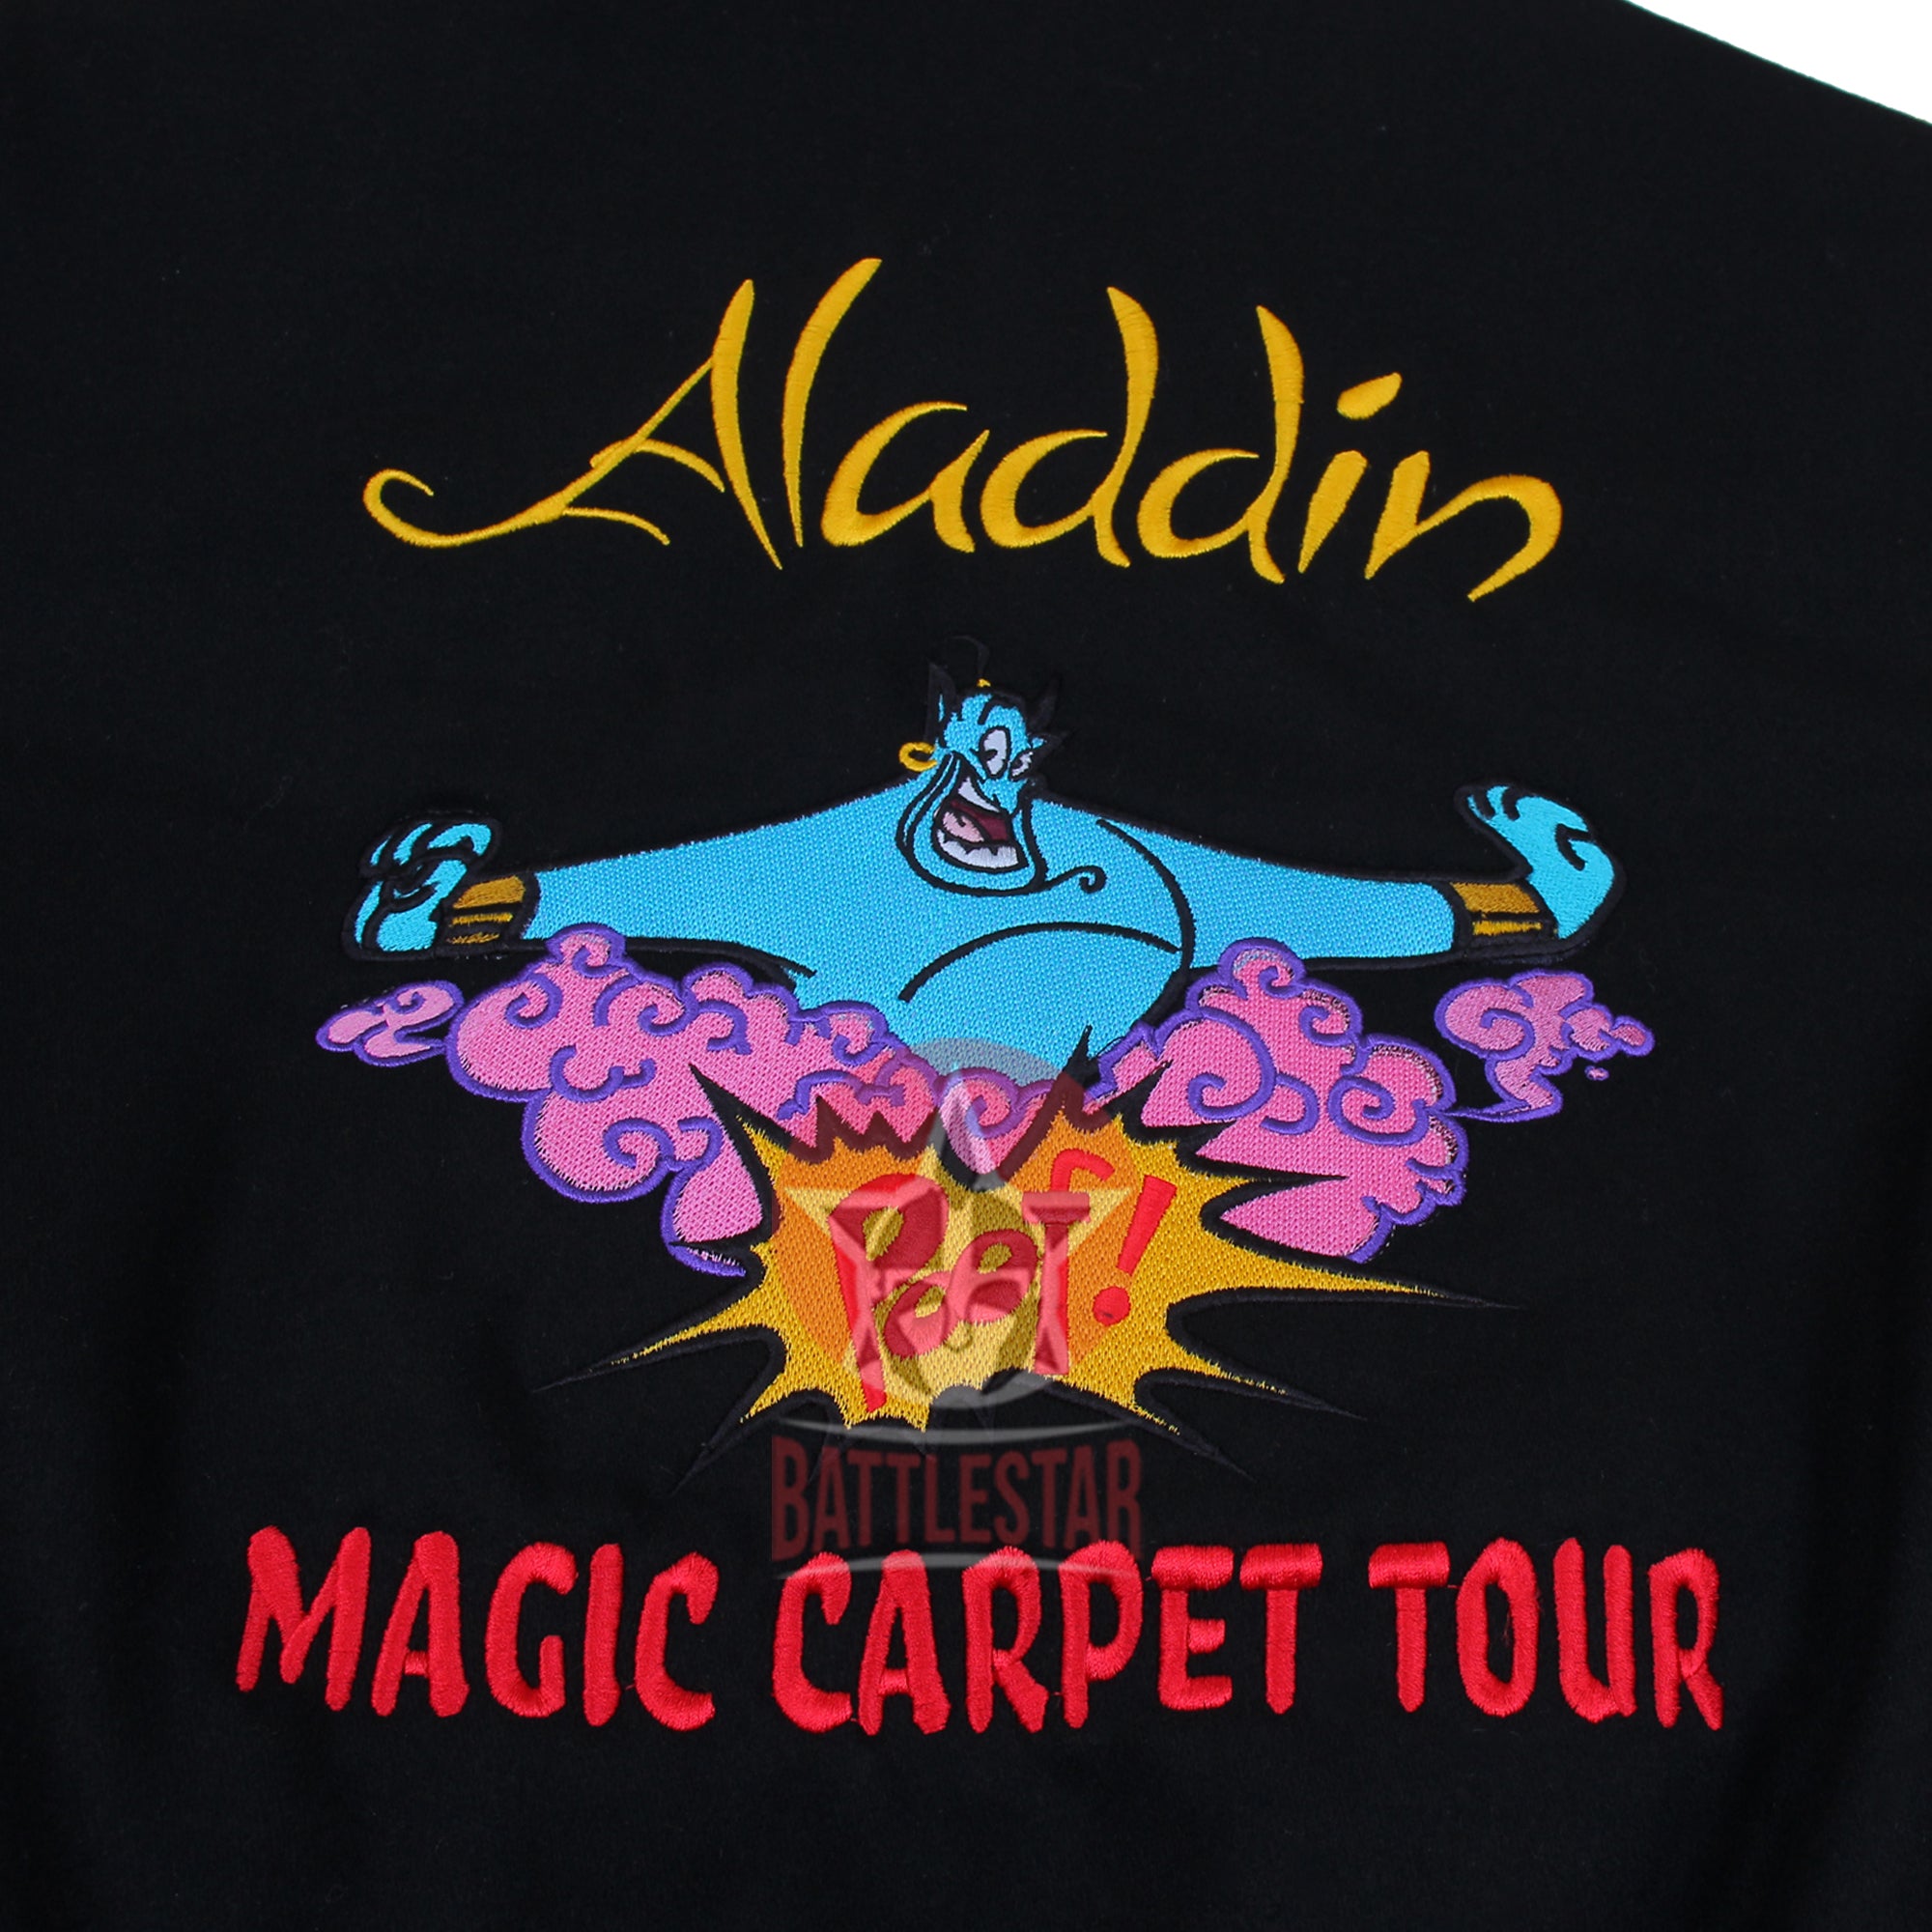 Aladdin Magic Carpet Byron Collar Varsity Baseball Jacket